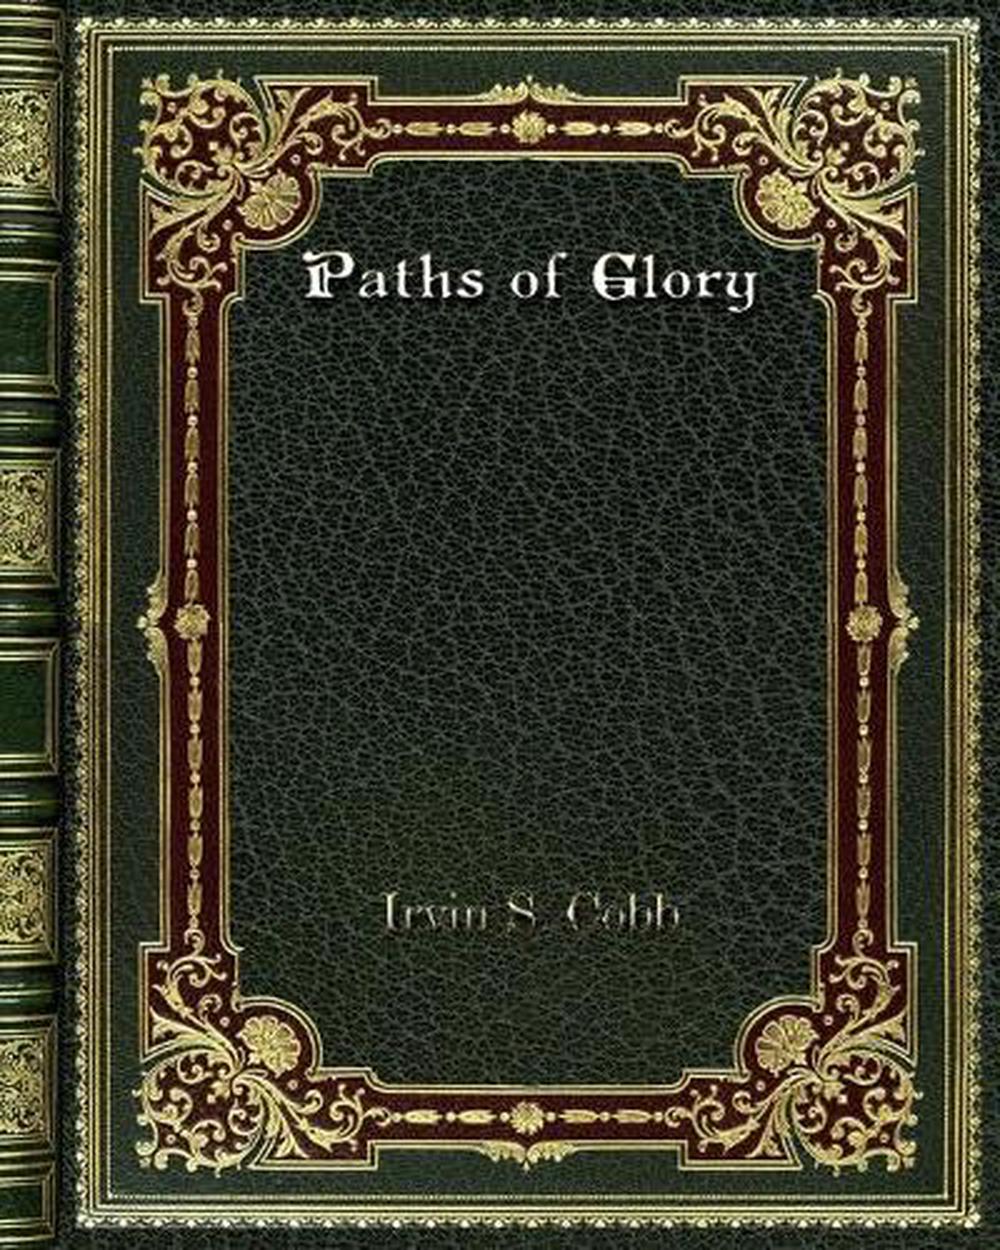 Paths of Glory by Humphrey Cobb